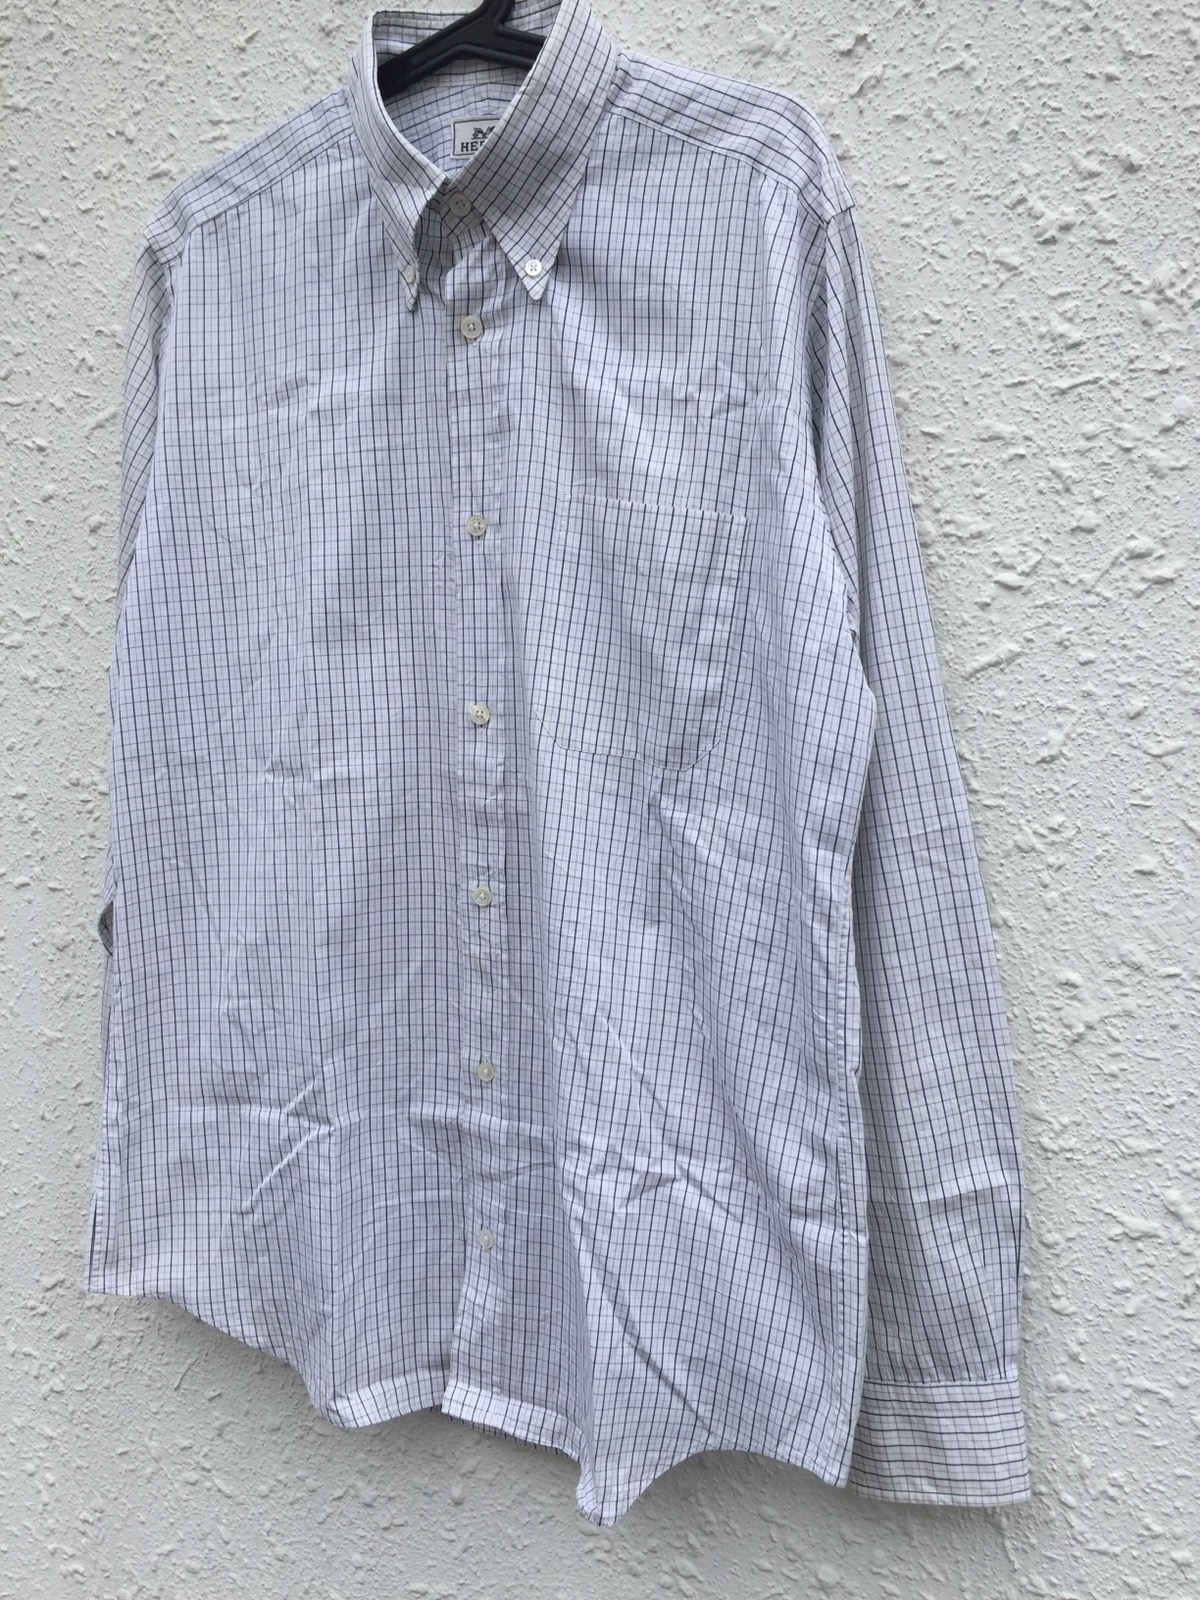 Vintage Hermes Basic Checkered Long Sleeve Shirt - 4